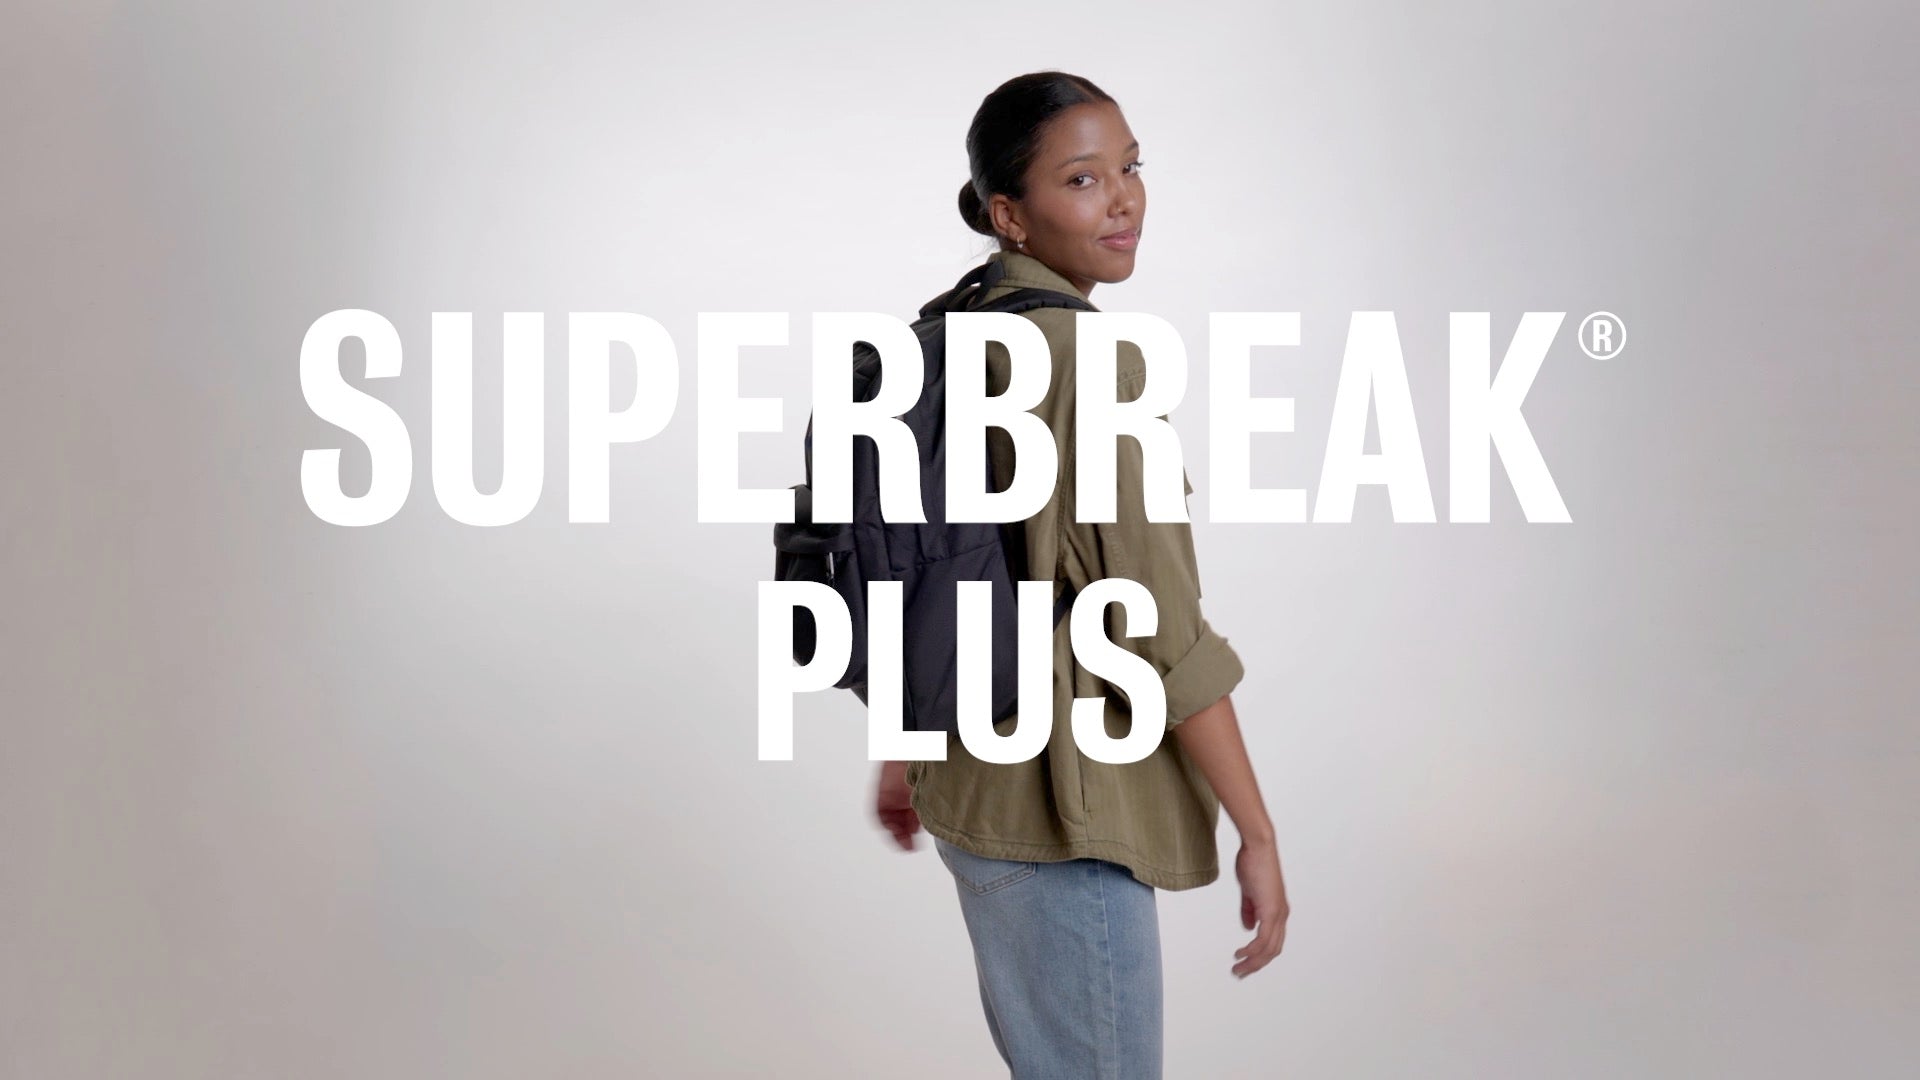 Load video: JanSport SuperBreak Plus Product Video